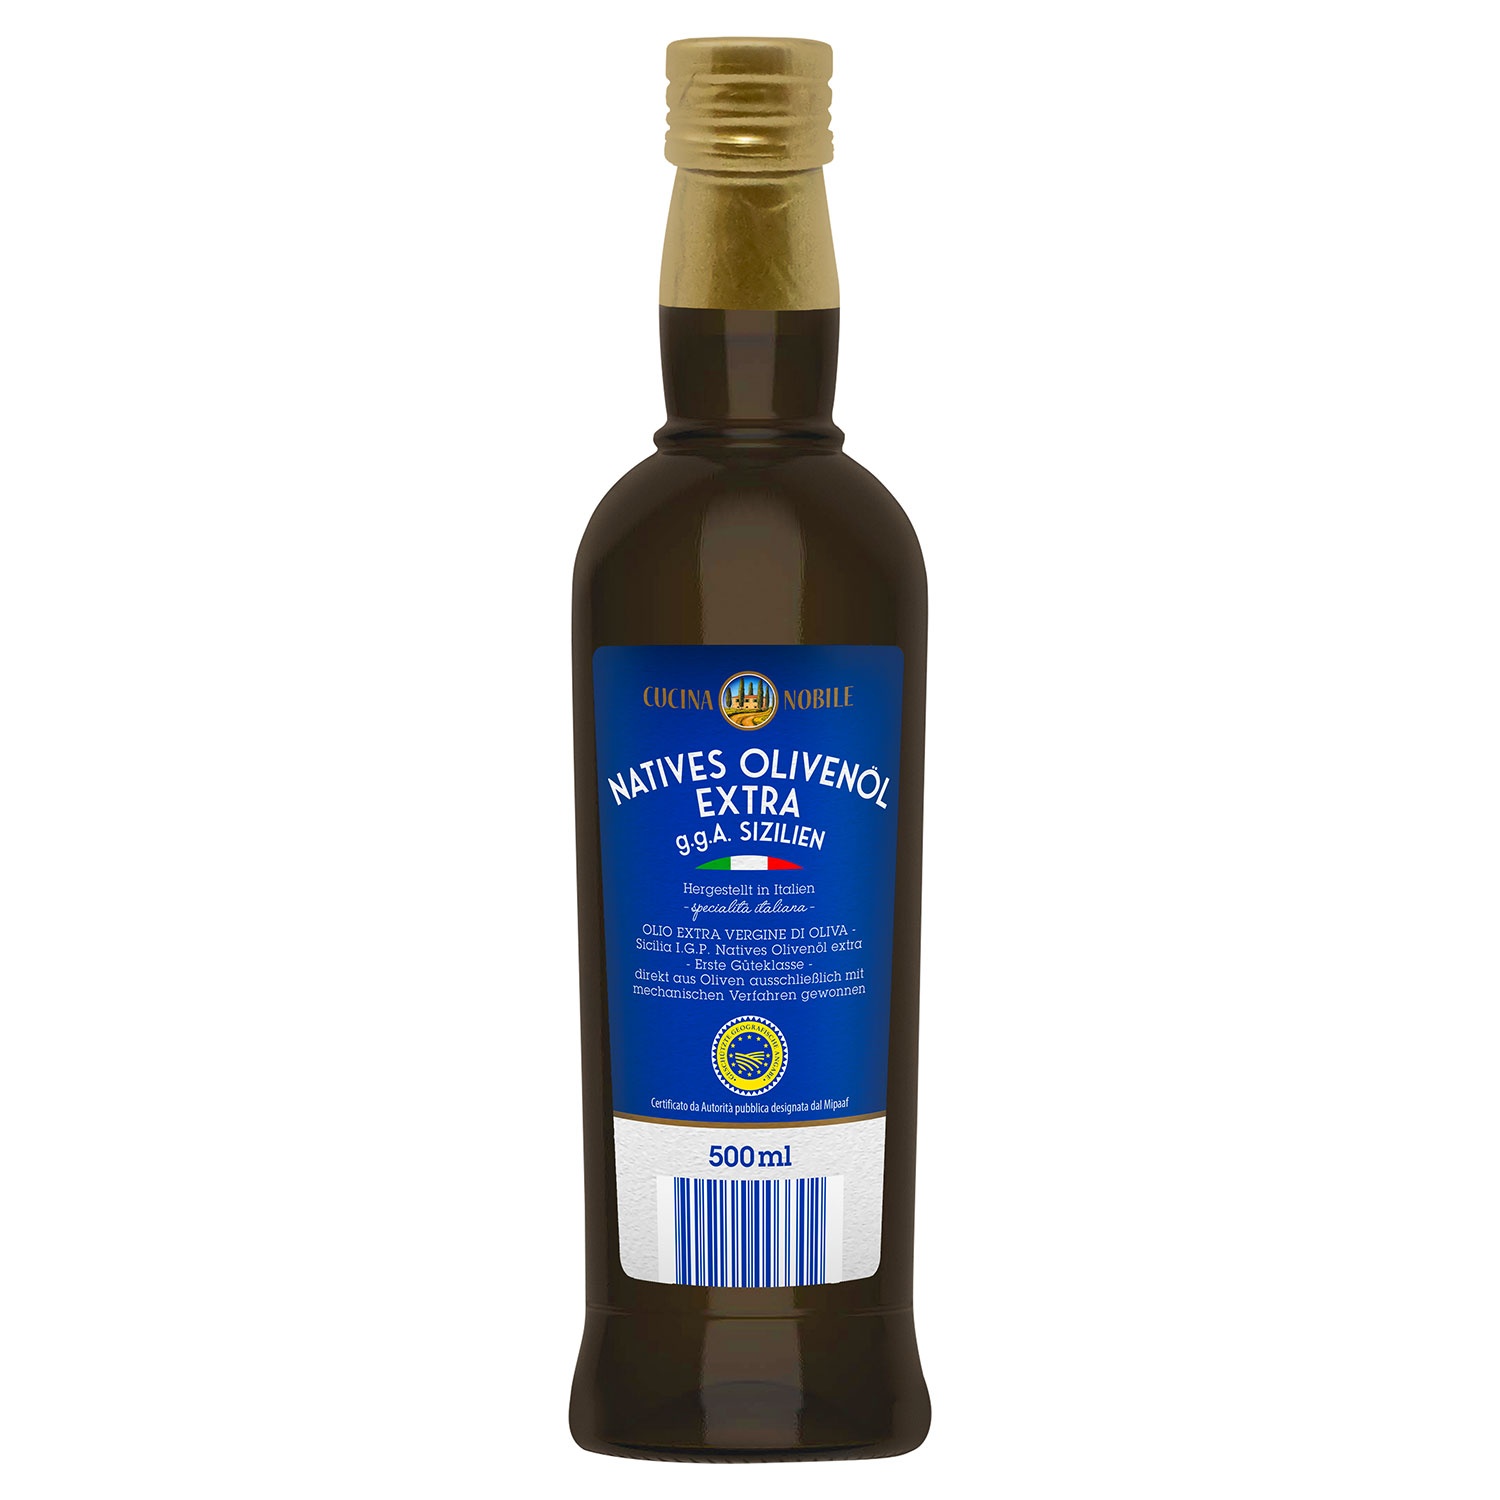 CUCINA NOBILE Natives Olivenöl extra g. g. A. Sizilien 500 ml